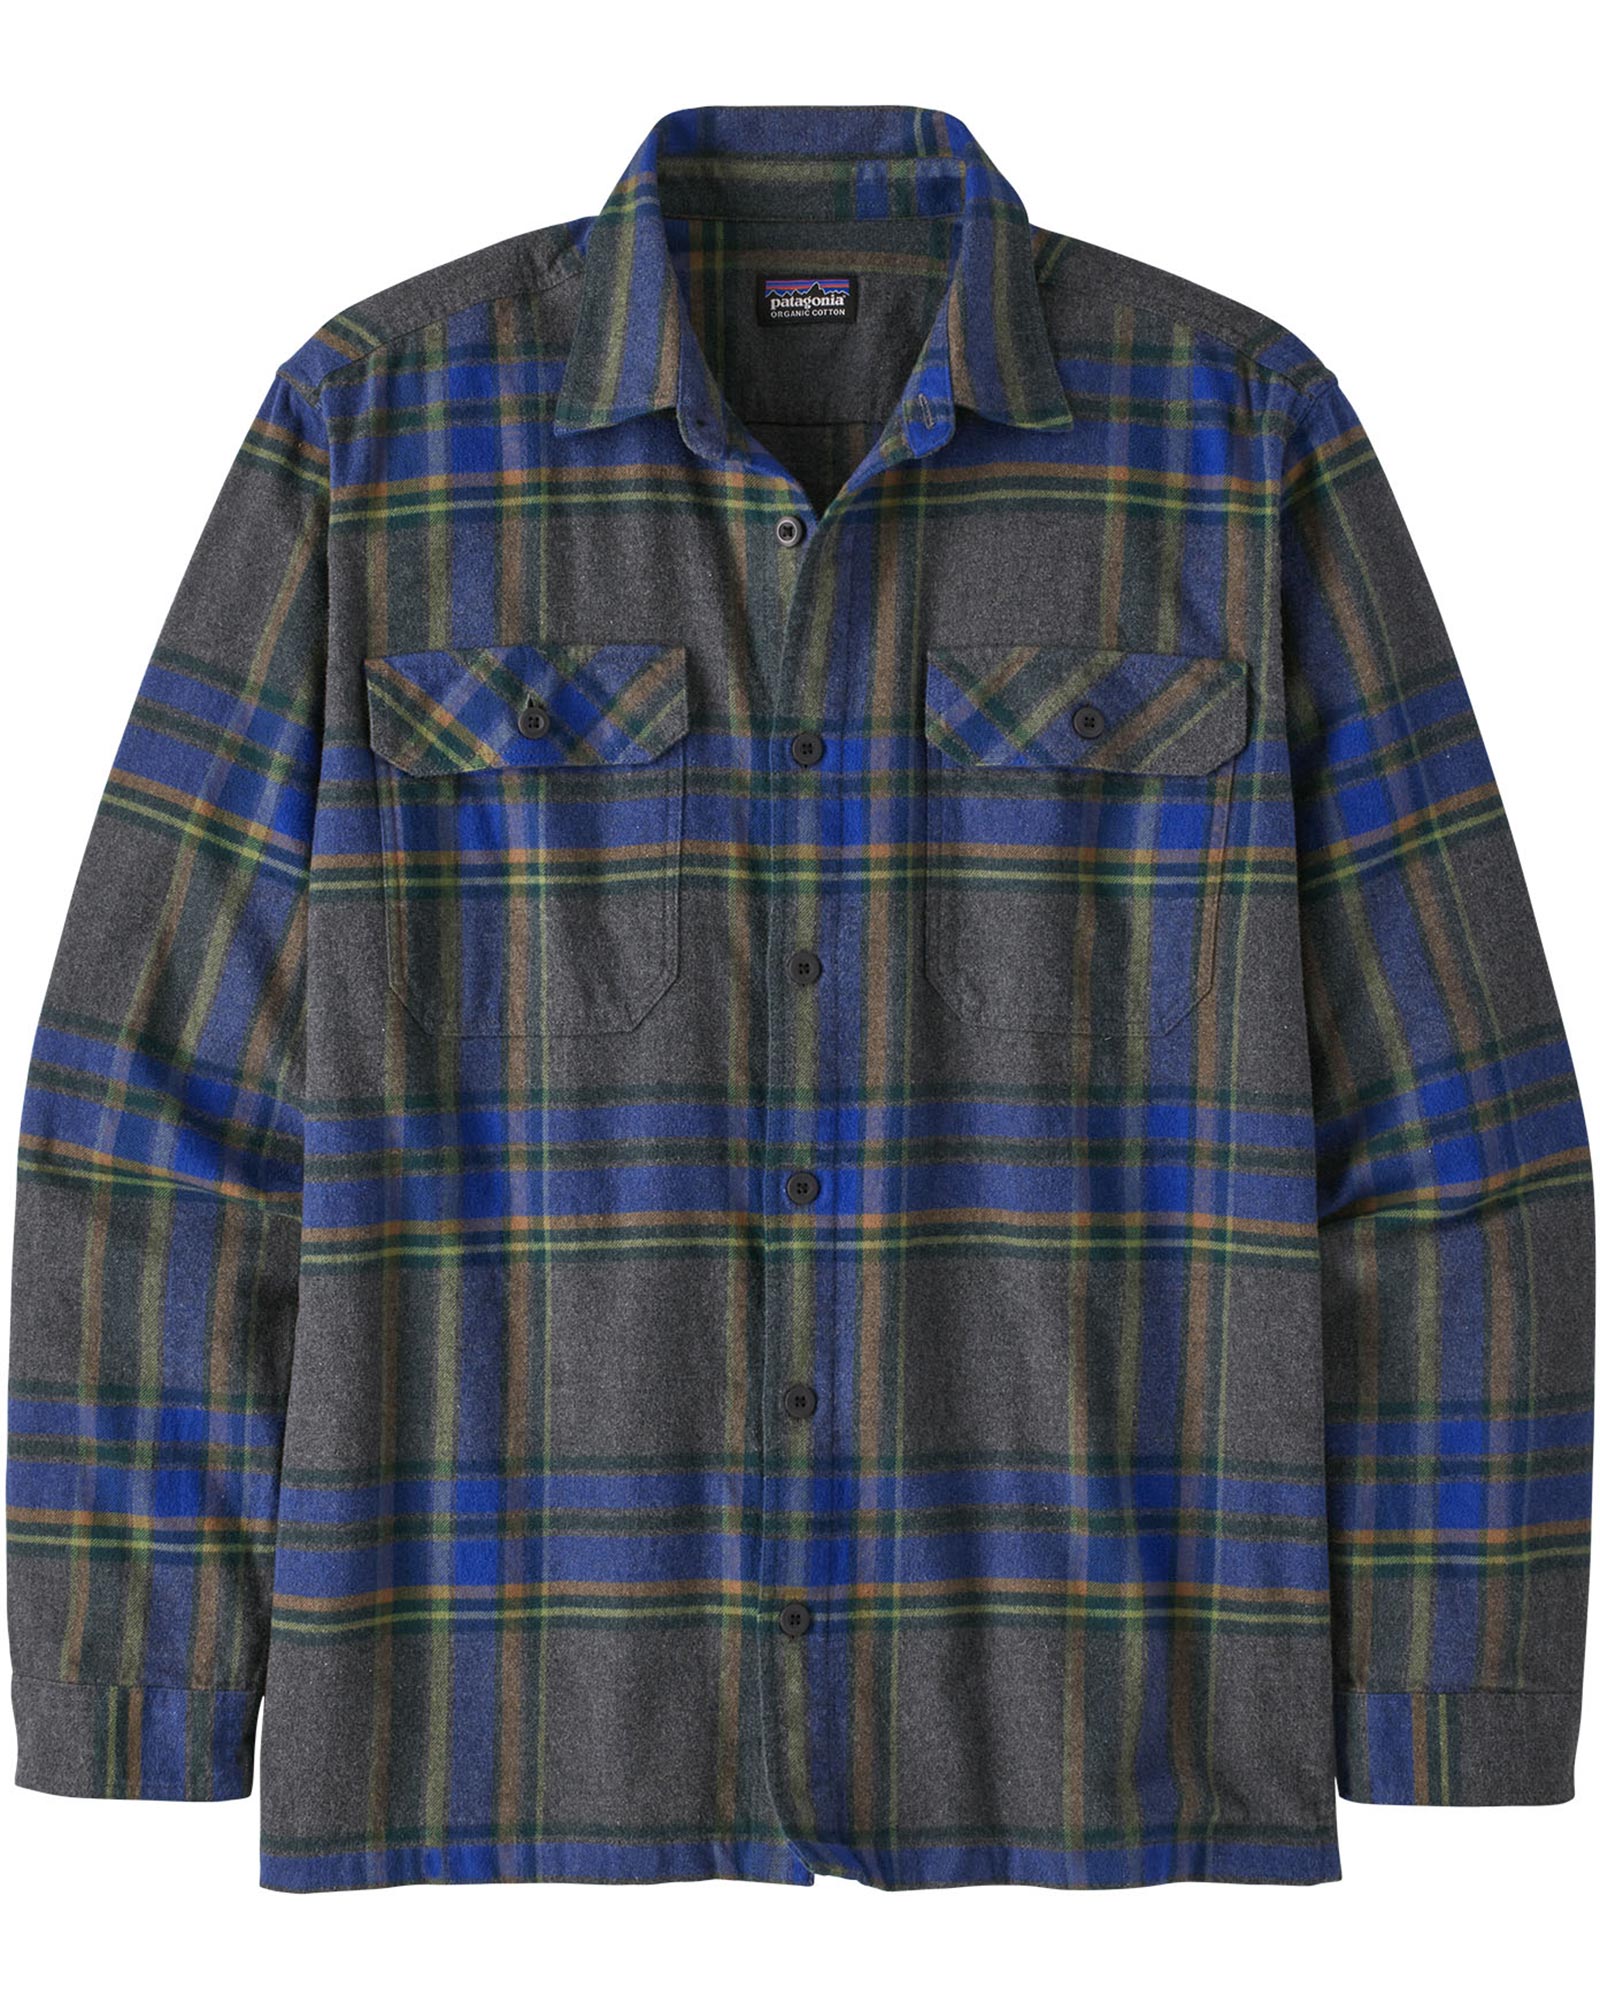 Patagonia Men’s Organic Long Sleeve Flannel Shirt - Edge/Black S